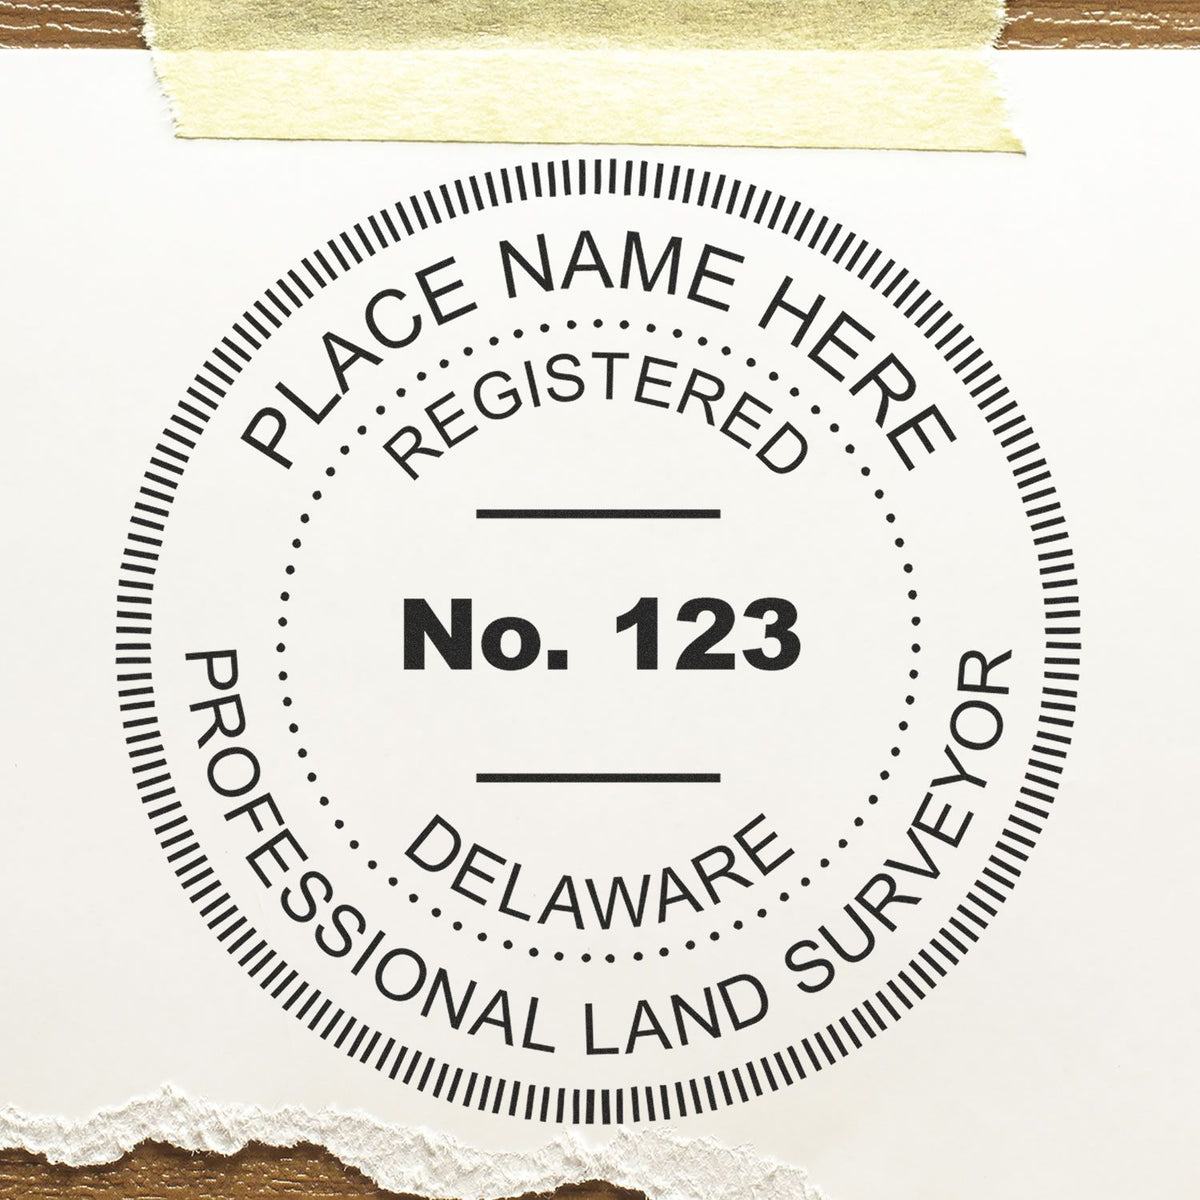 Delaware Land Surveyor Seal Stamp In Use Photo